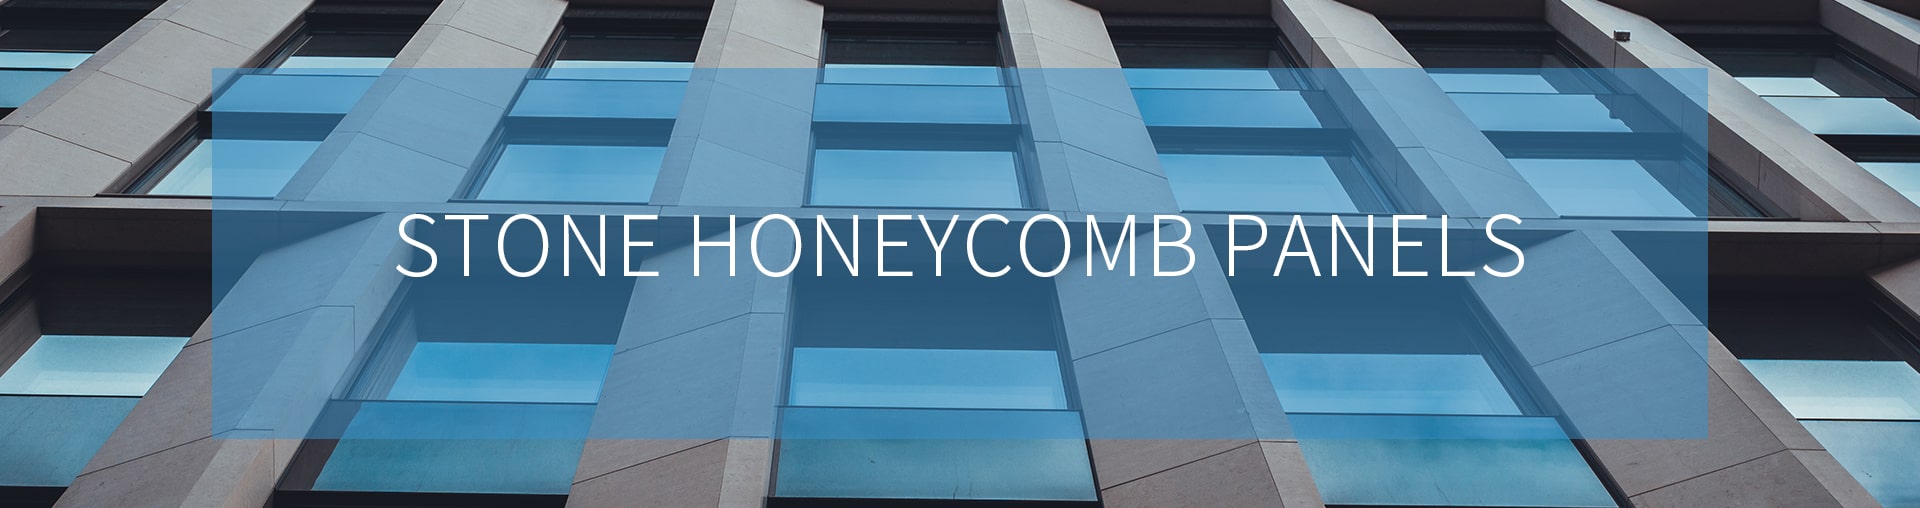 Stone Honeycomb Panels